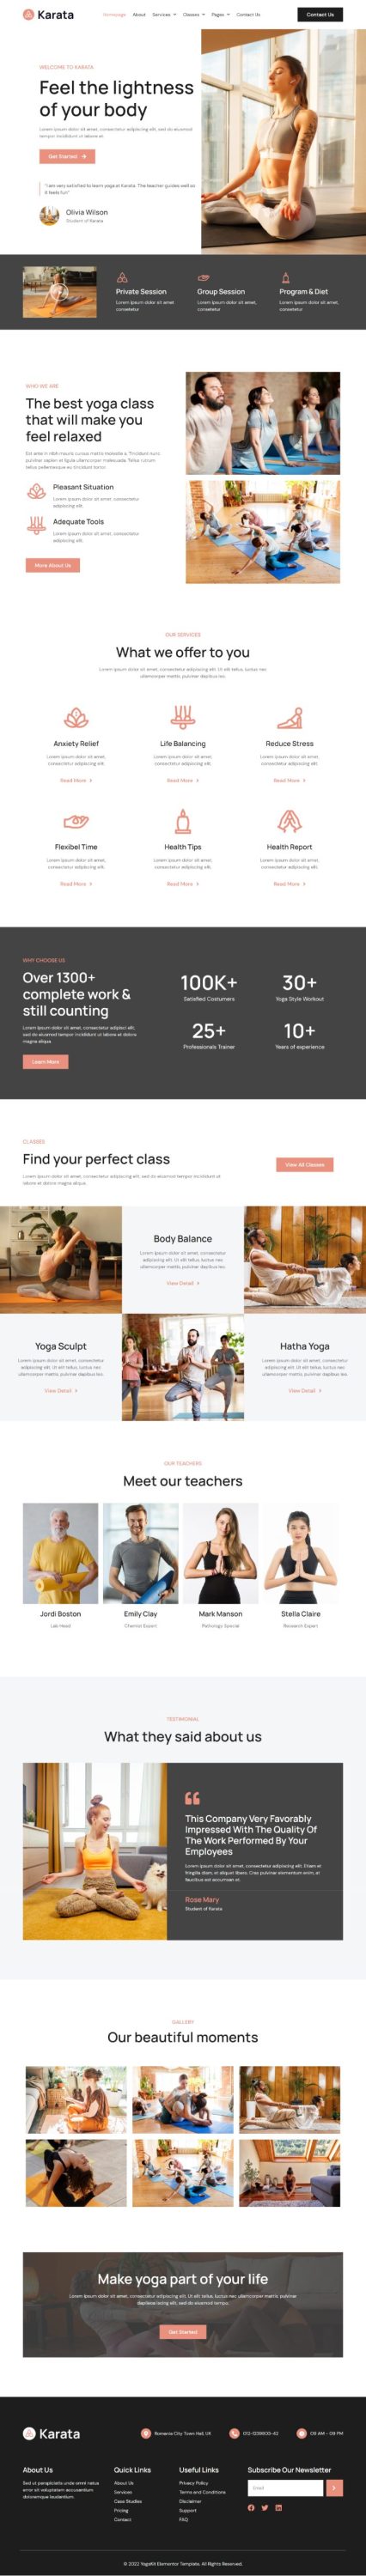 Mẫu website dịch vụ trung tâm yoga - Karata